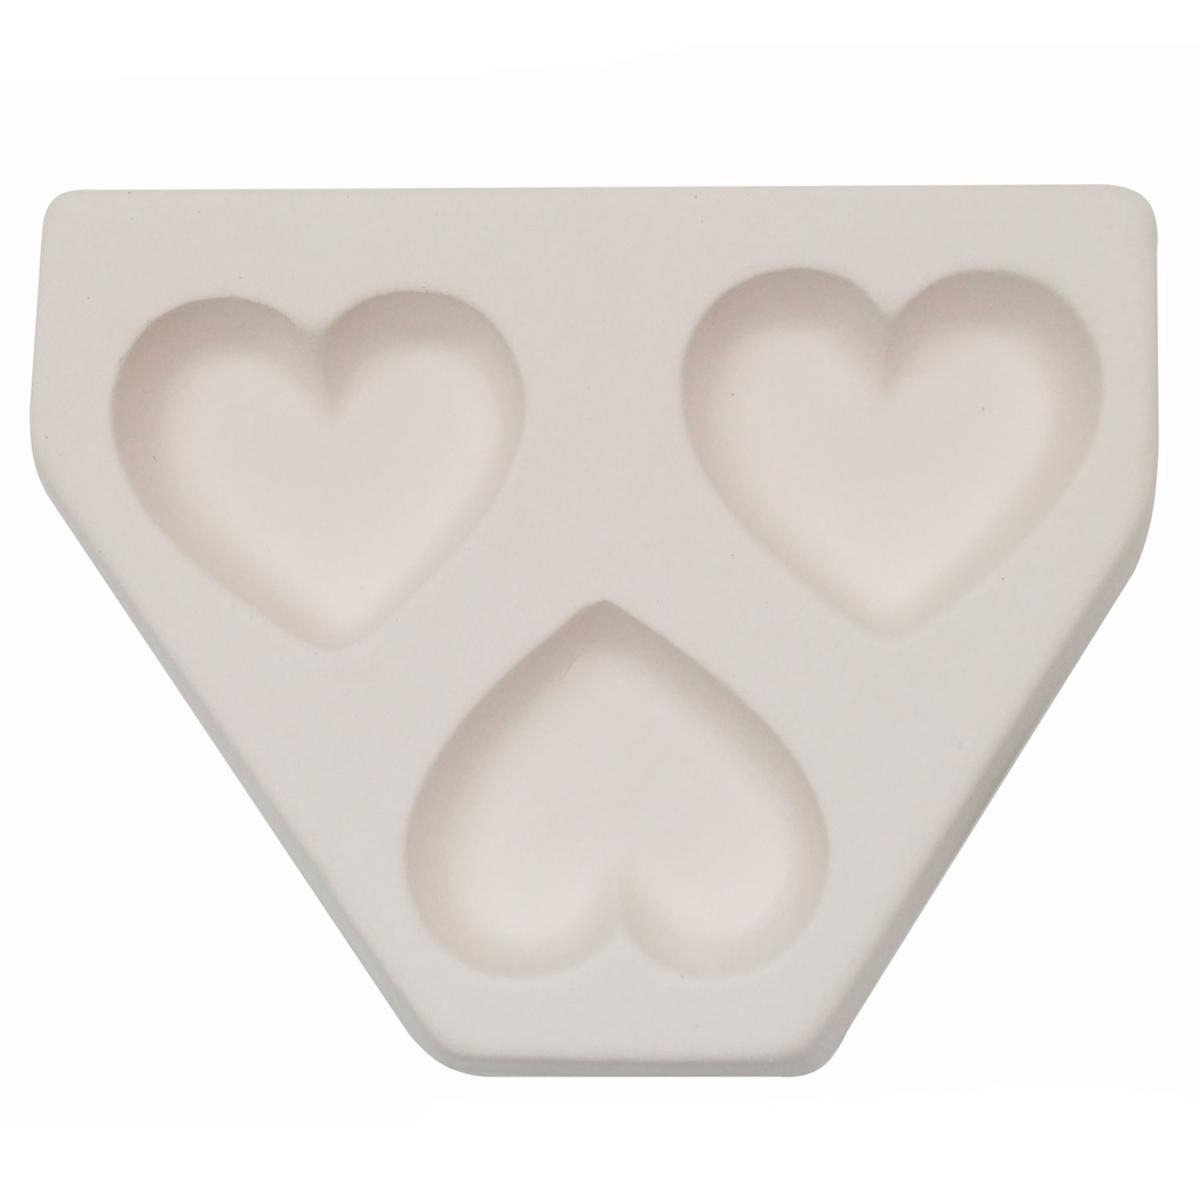 Set of 3 Hearts soap or plaster mold set 4501